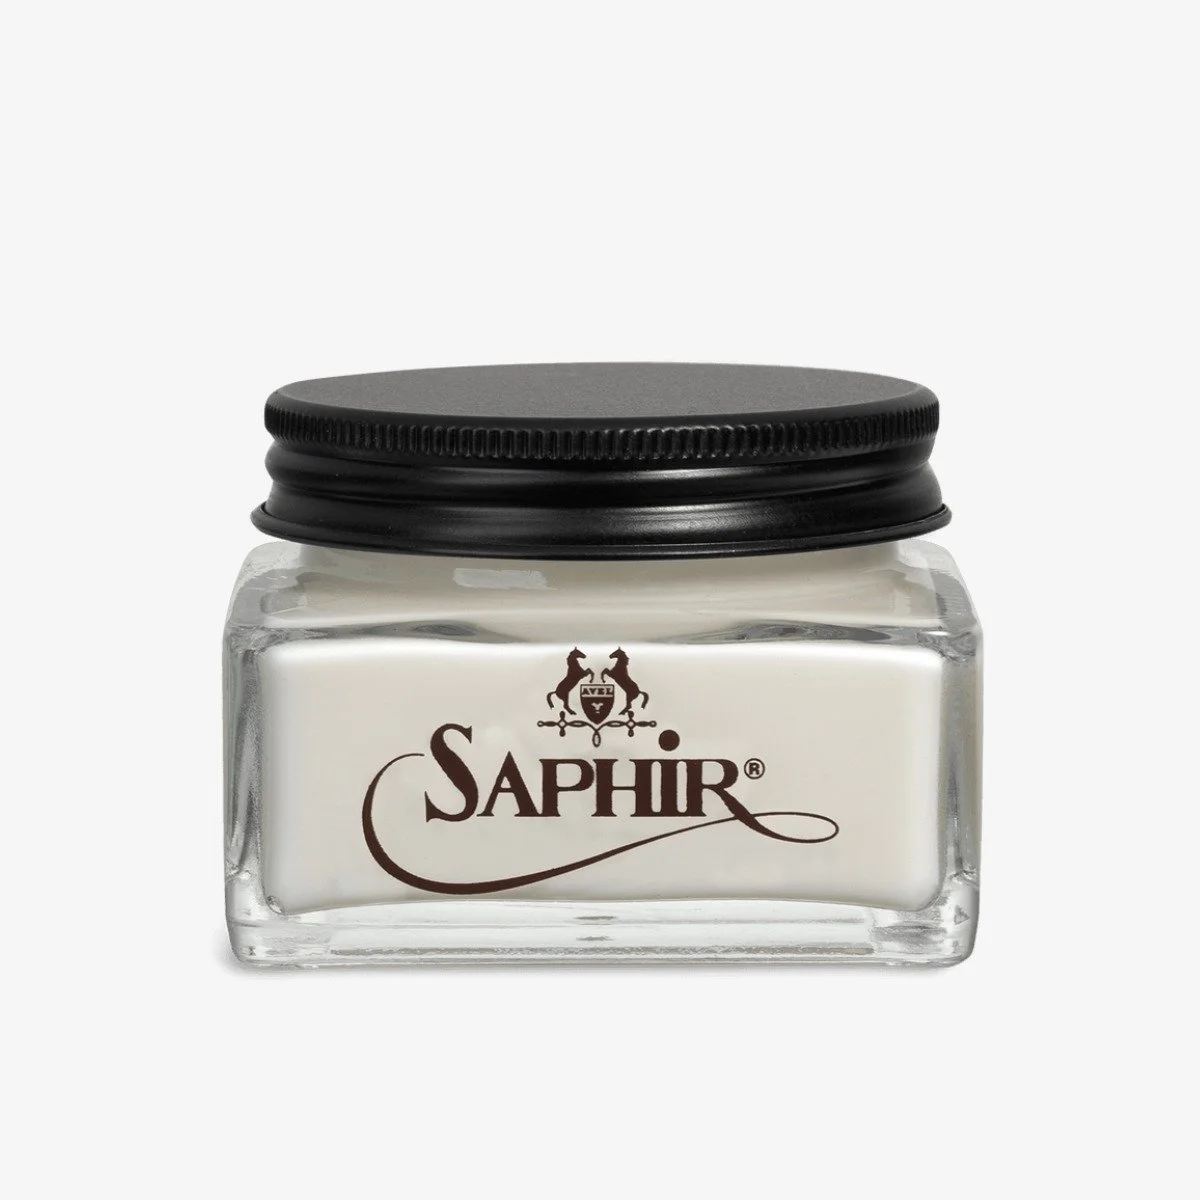 Saphir Renovateur leather cream